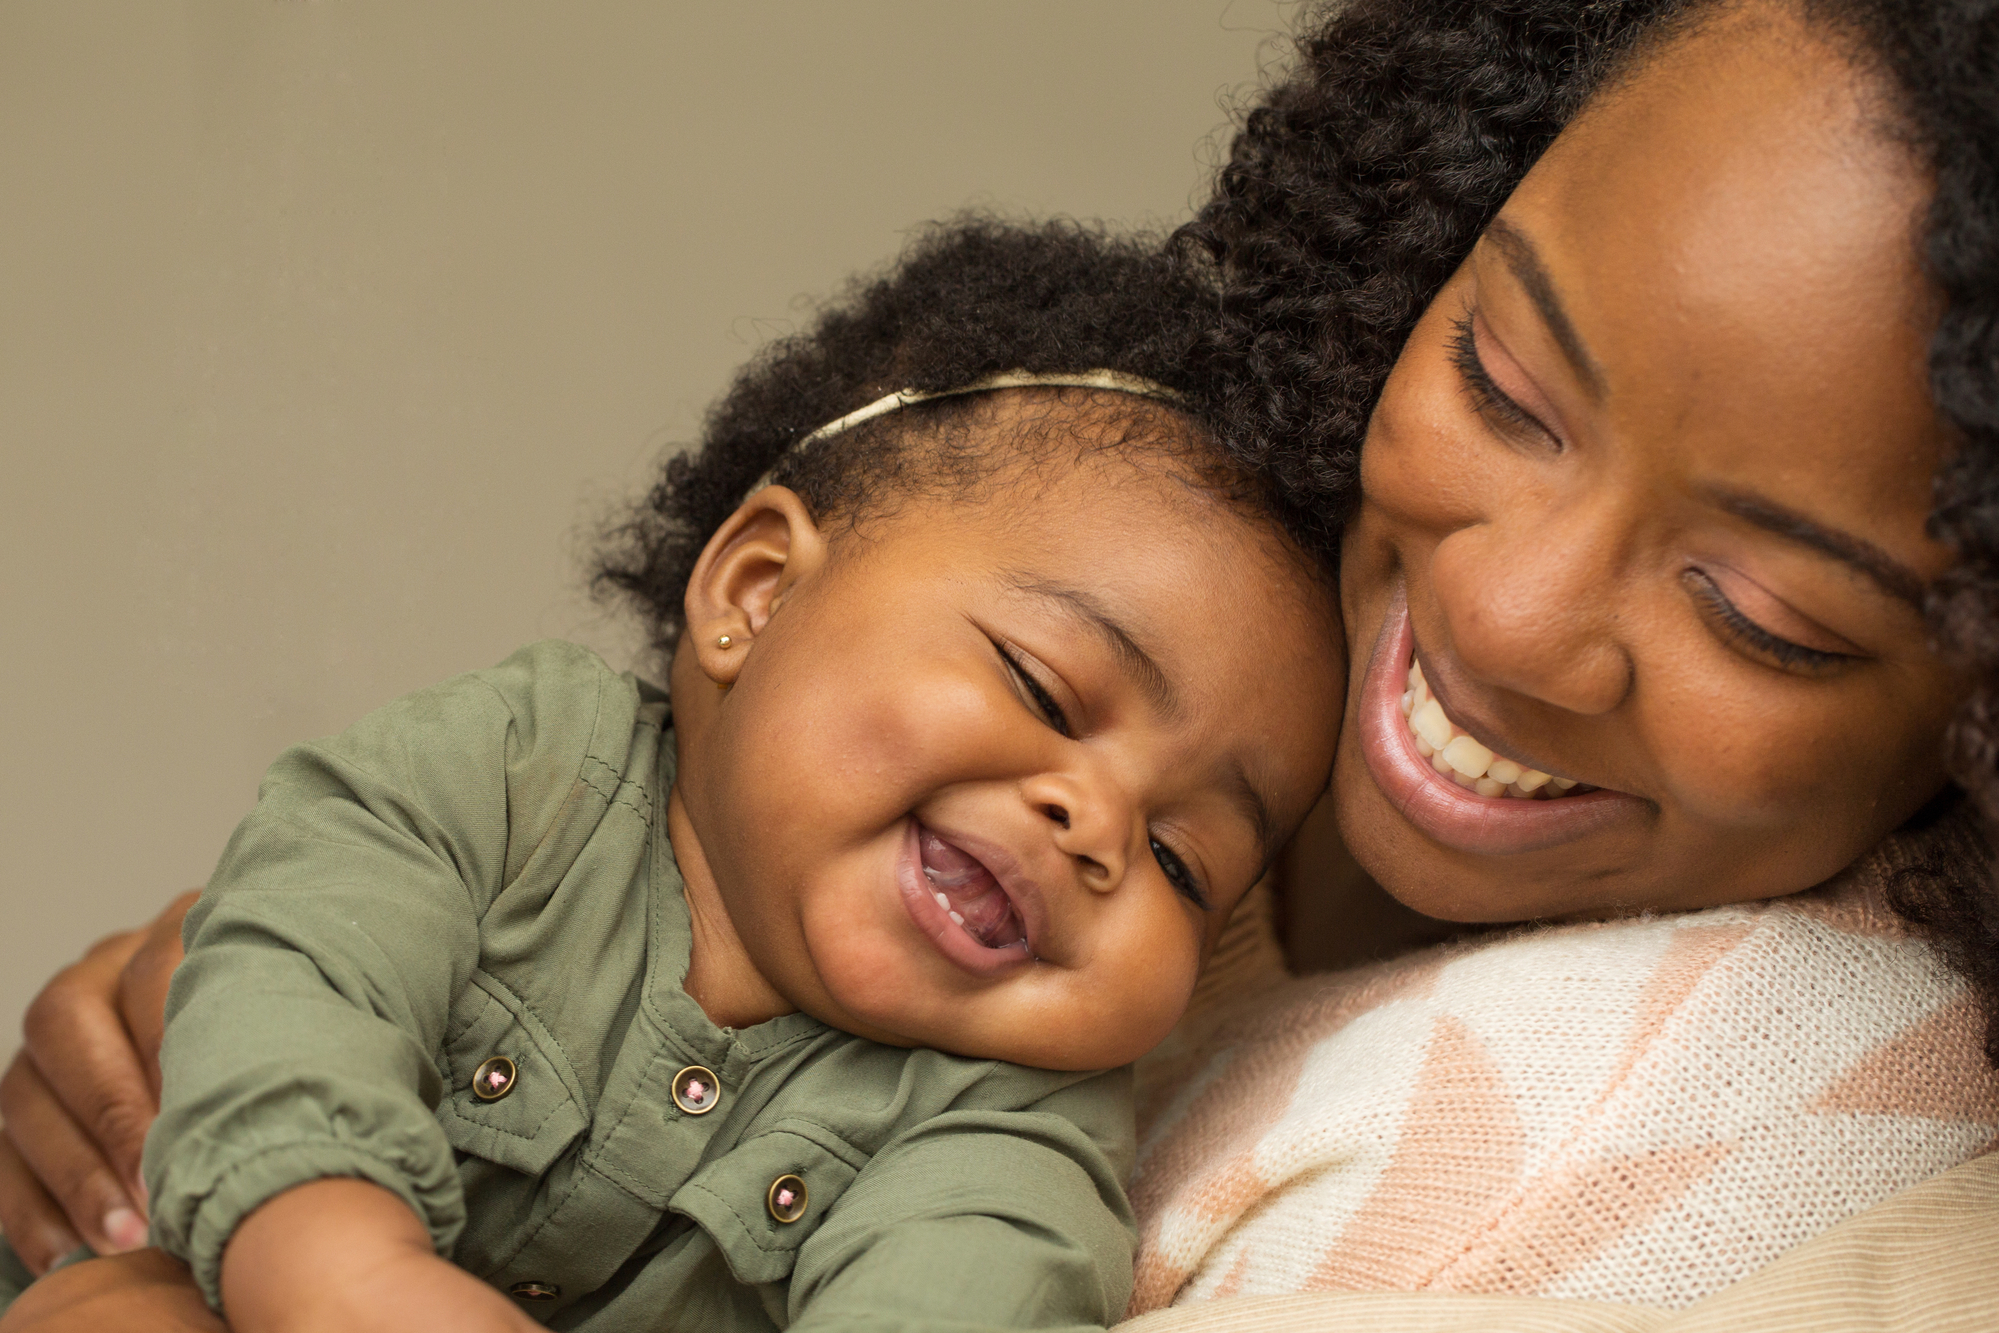 CCNC's PMH, Medicaid programs help reduce NC unintended pregnancies